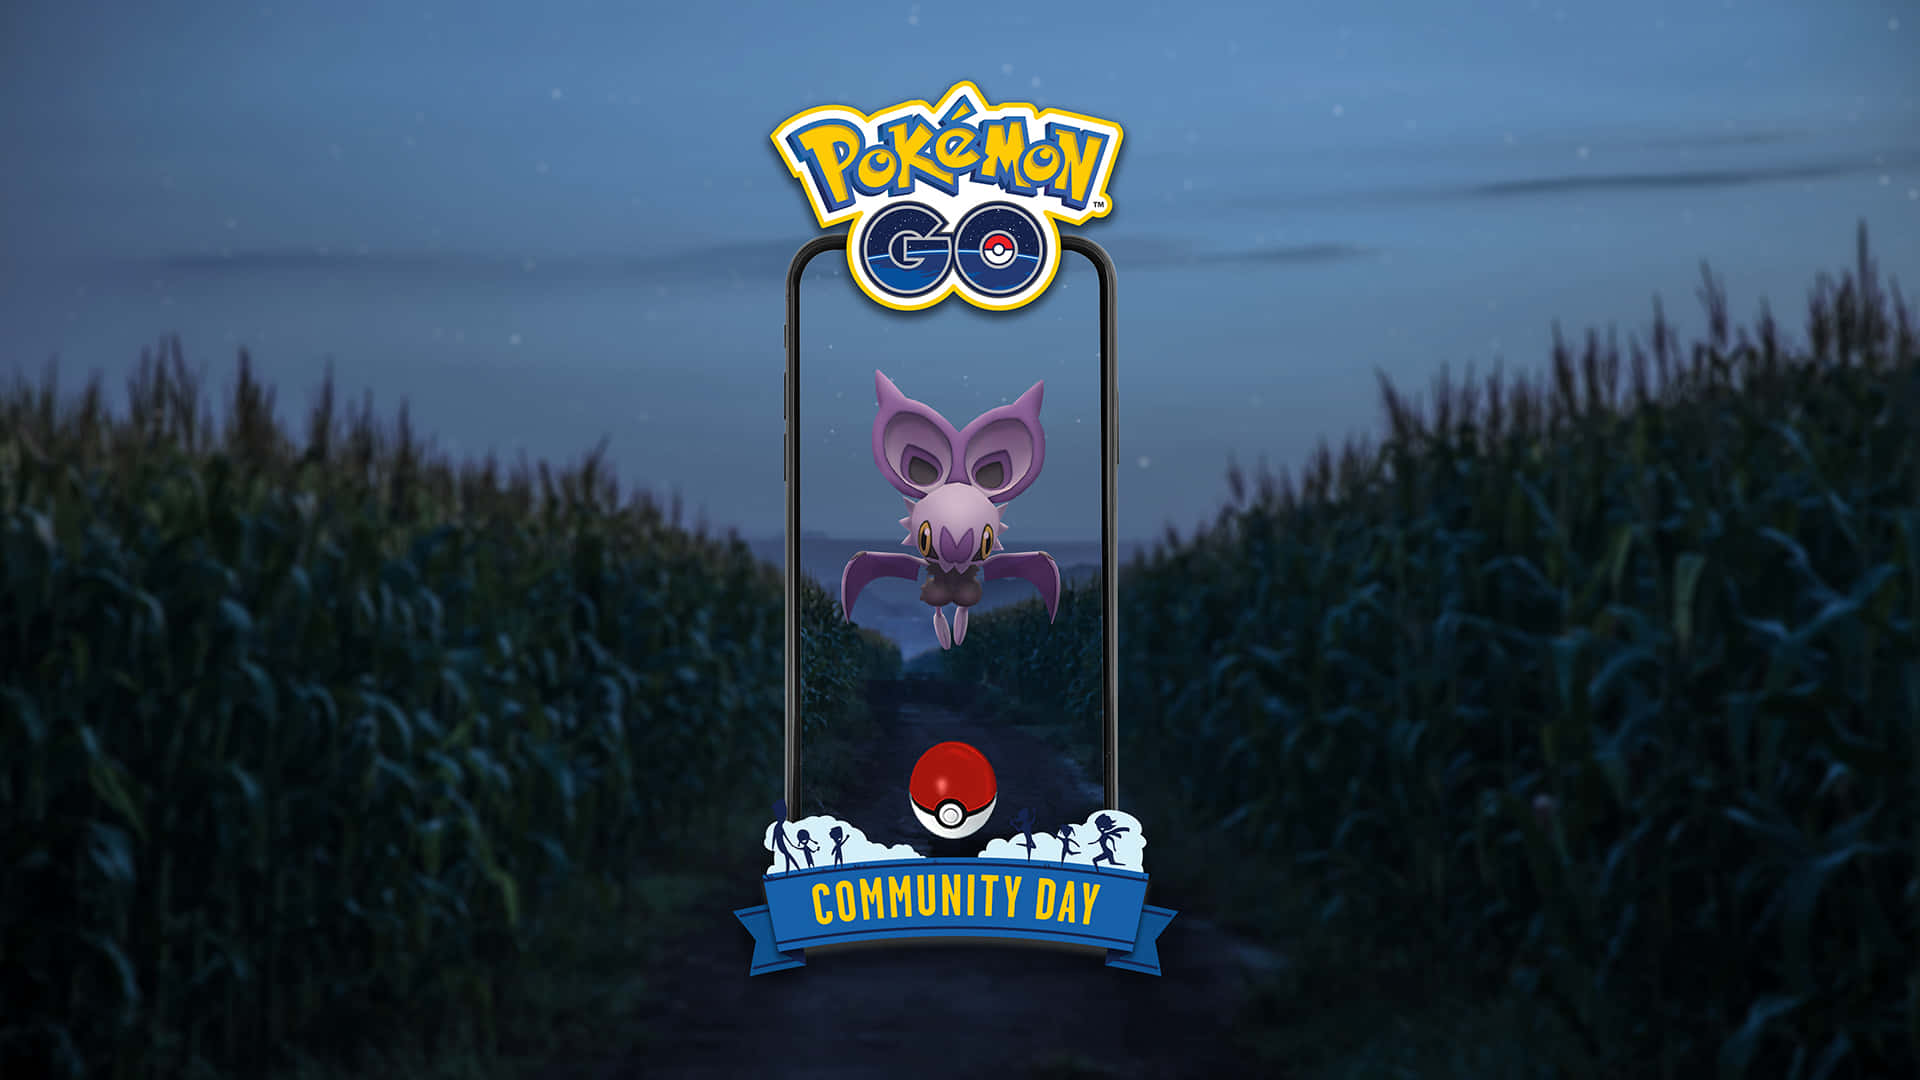 Noibati Pokémon Go Community Day Wallpaper